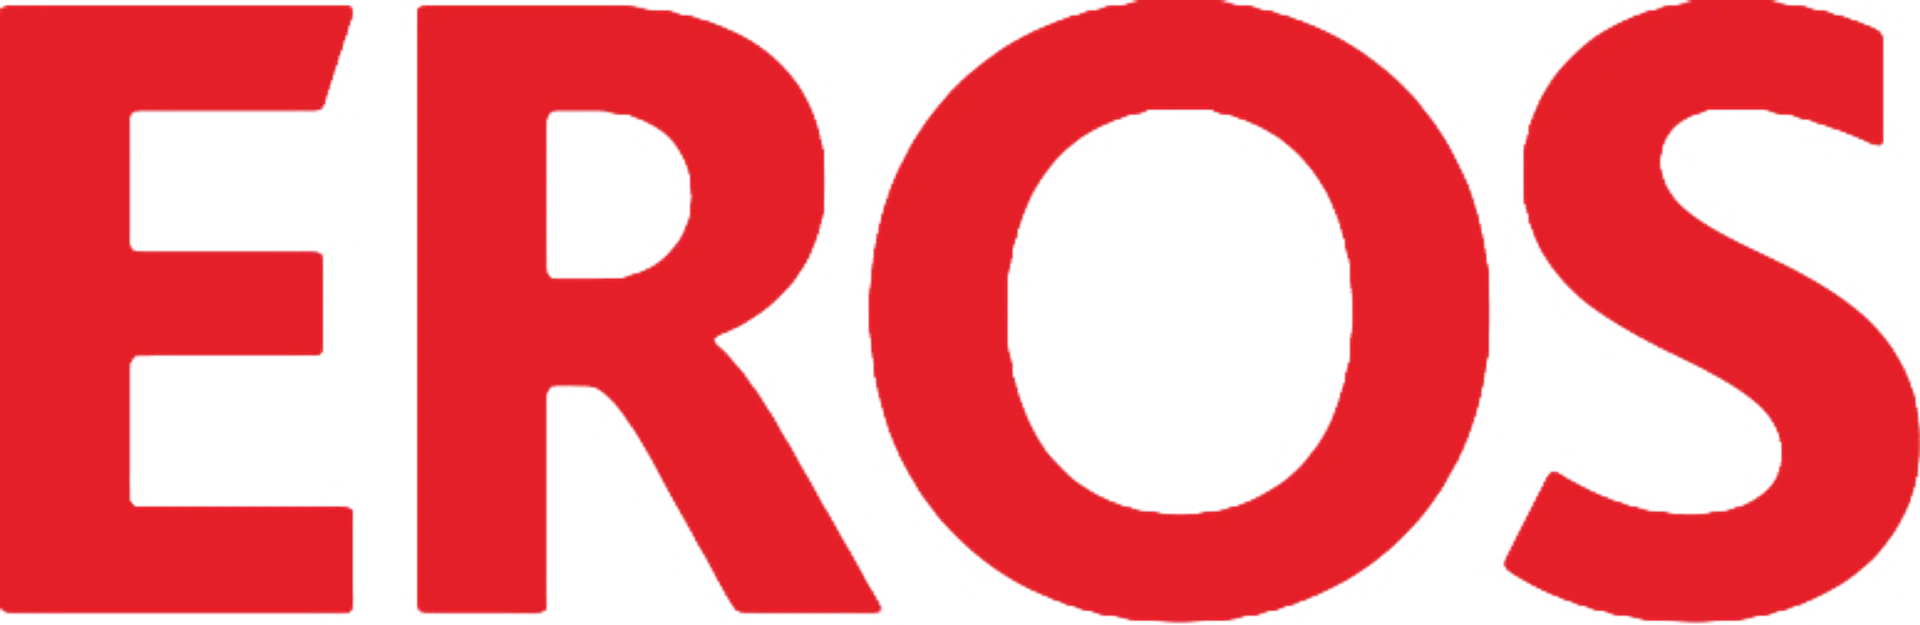 EROS logo. Current catalogue